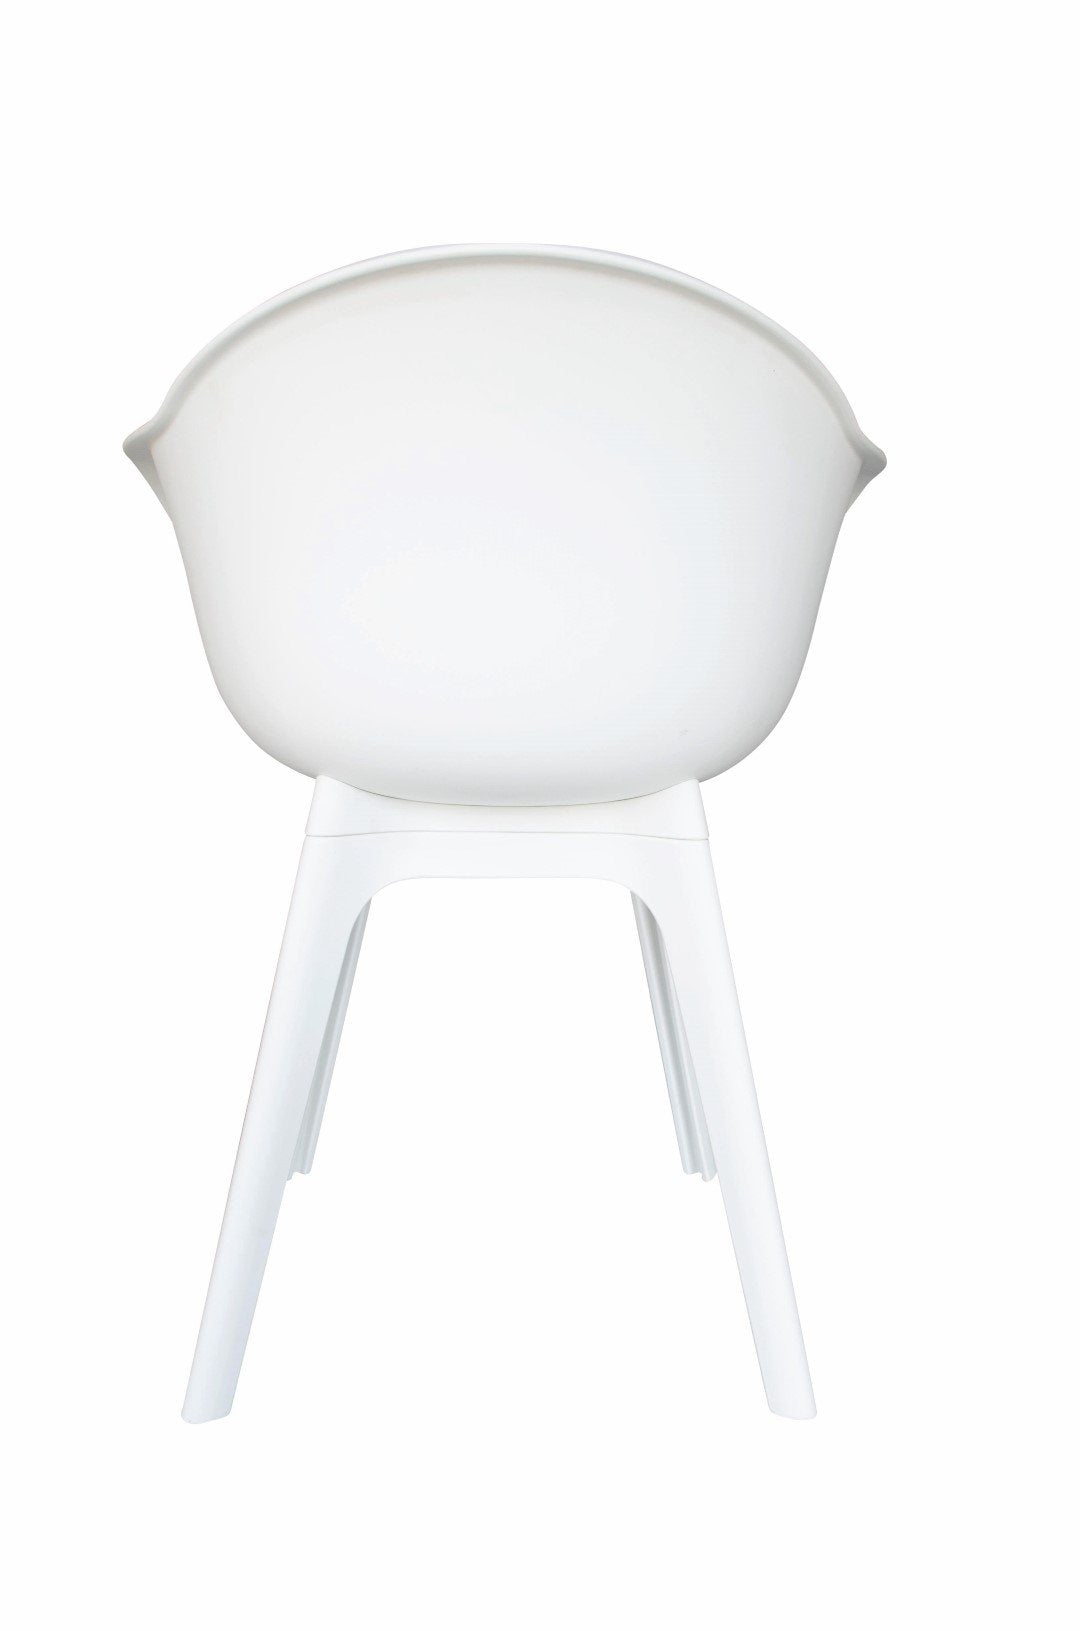 Xianx table Ø175cm | Mona bucket seat white